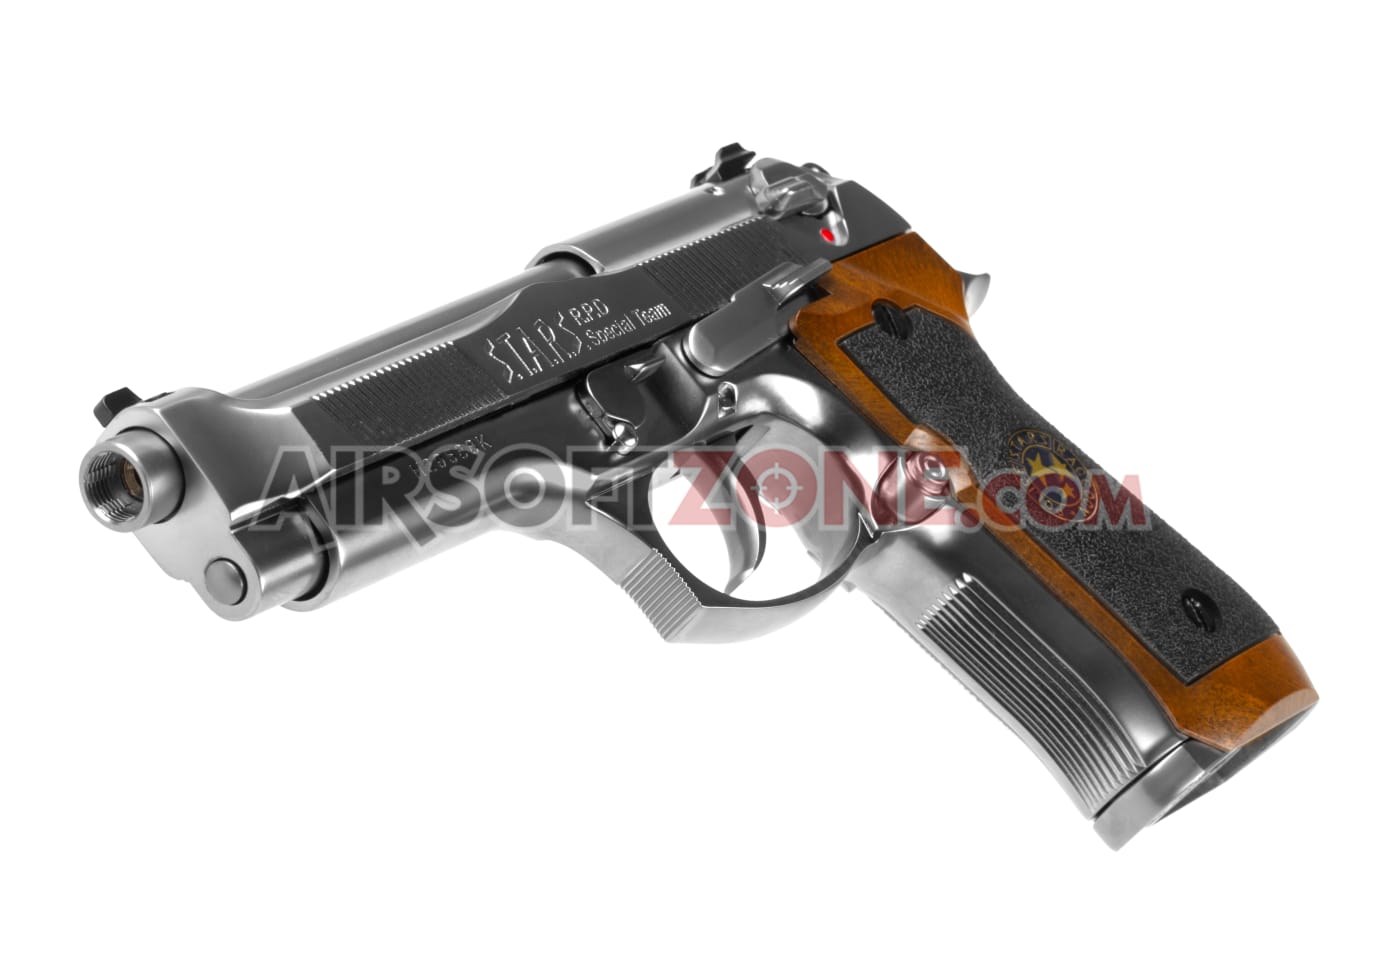 WE Beretta M92 Silver Full Metal Airsoft Gas Blowback Pistol 